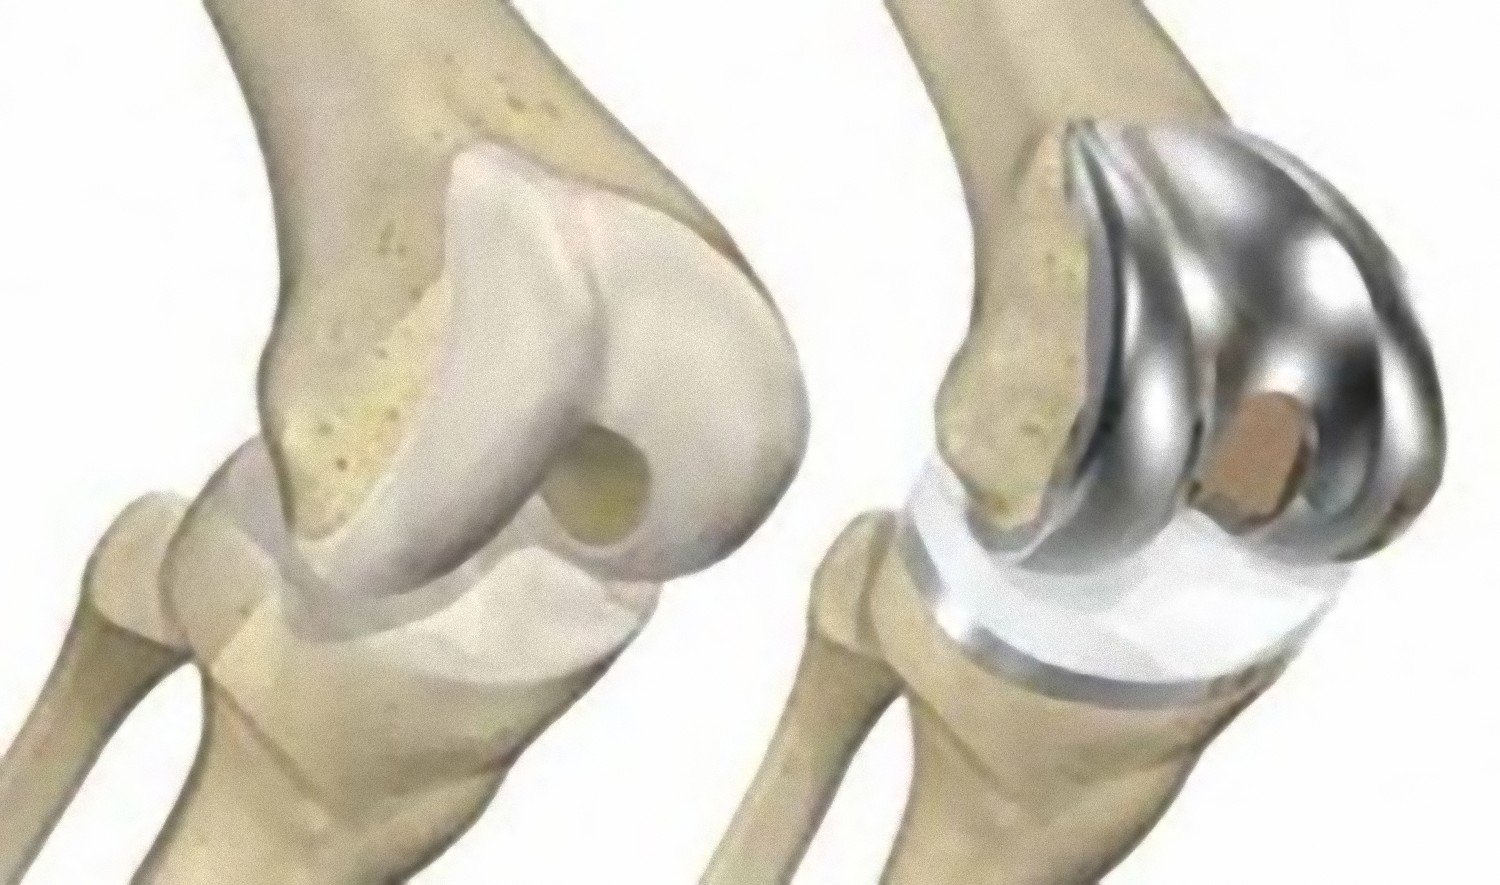 Сустав в воронеже купить. Артропластика коленного сустава. Maxx Orthopedic эндопротез коленного. Артропластика тазобедренного сустава. Тотальное эндопротезирование коленного сустава.